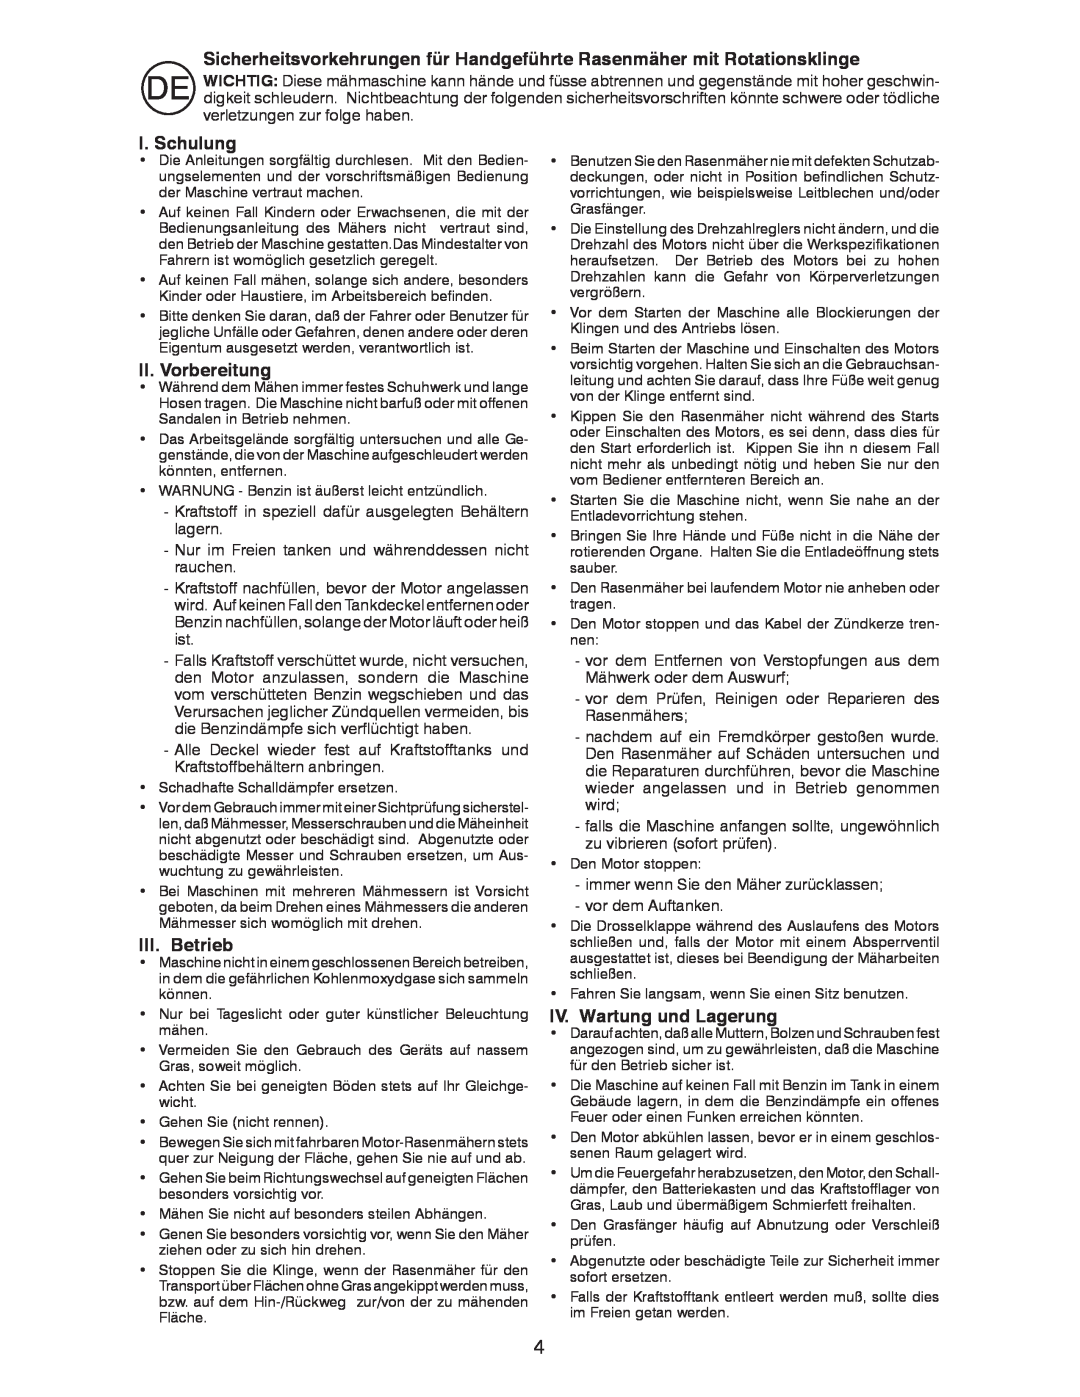 Husqvarna J 55L instruction manual I. Schulung, II. Vorbereitung, III. Betrieb, IV. Wartung und Lagerung 